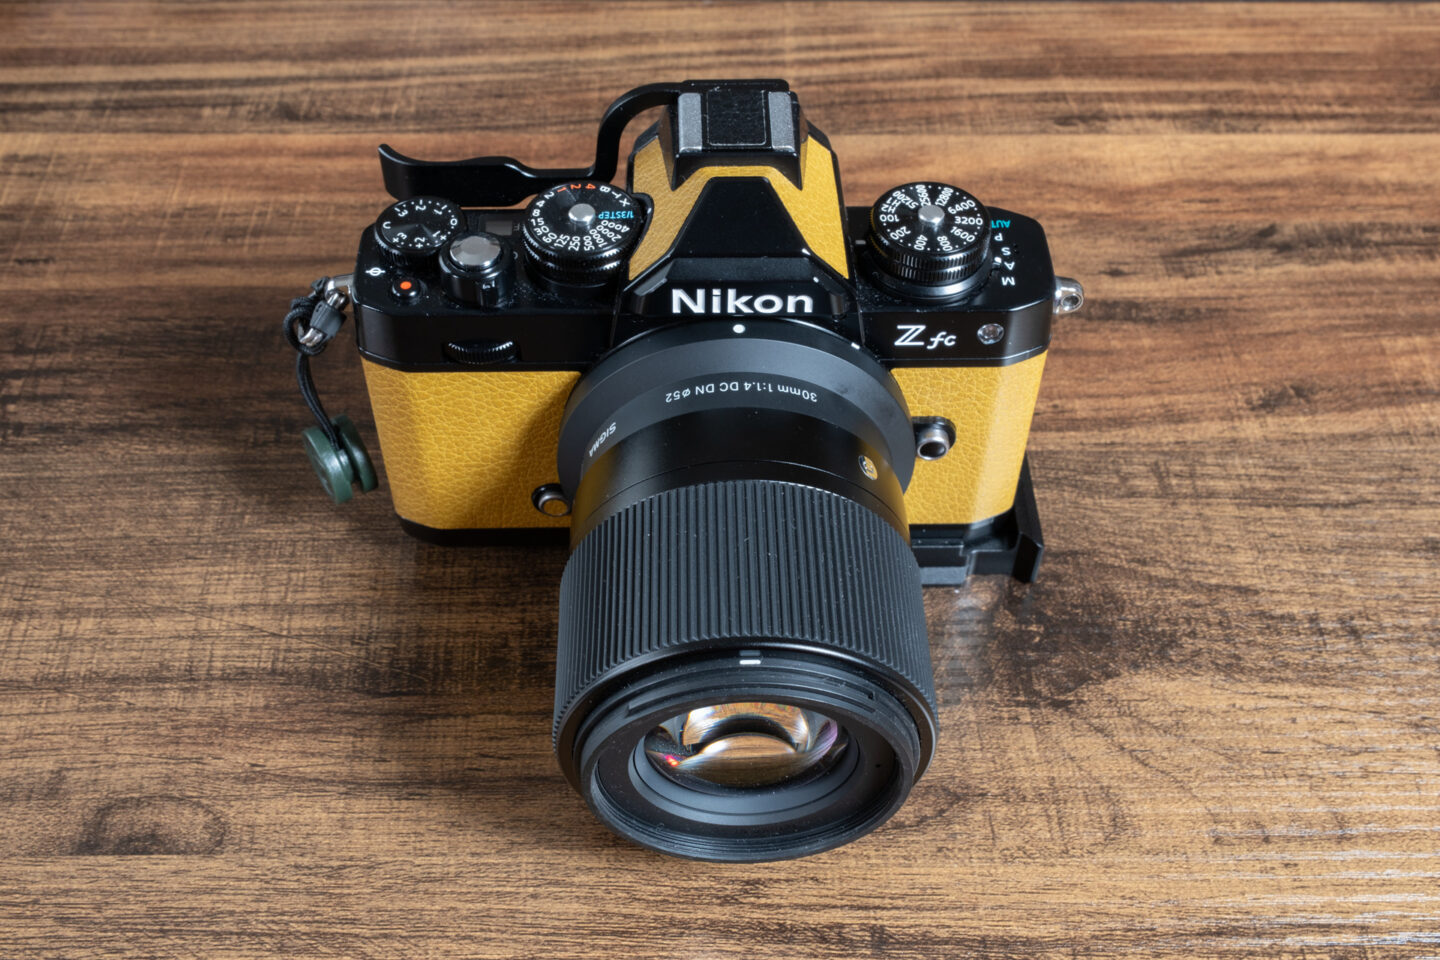 56F1.4 DC DN Nikon Zマウント